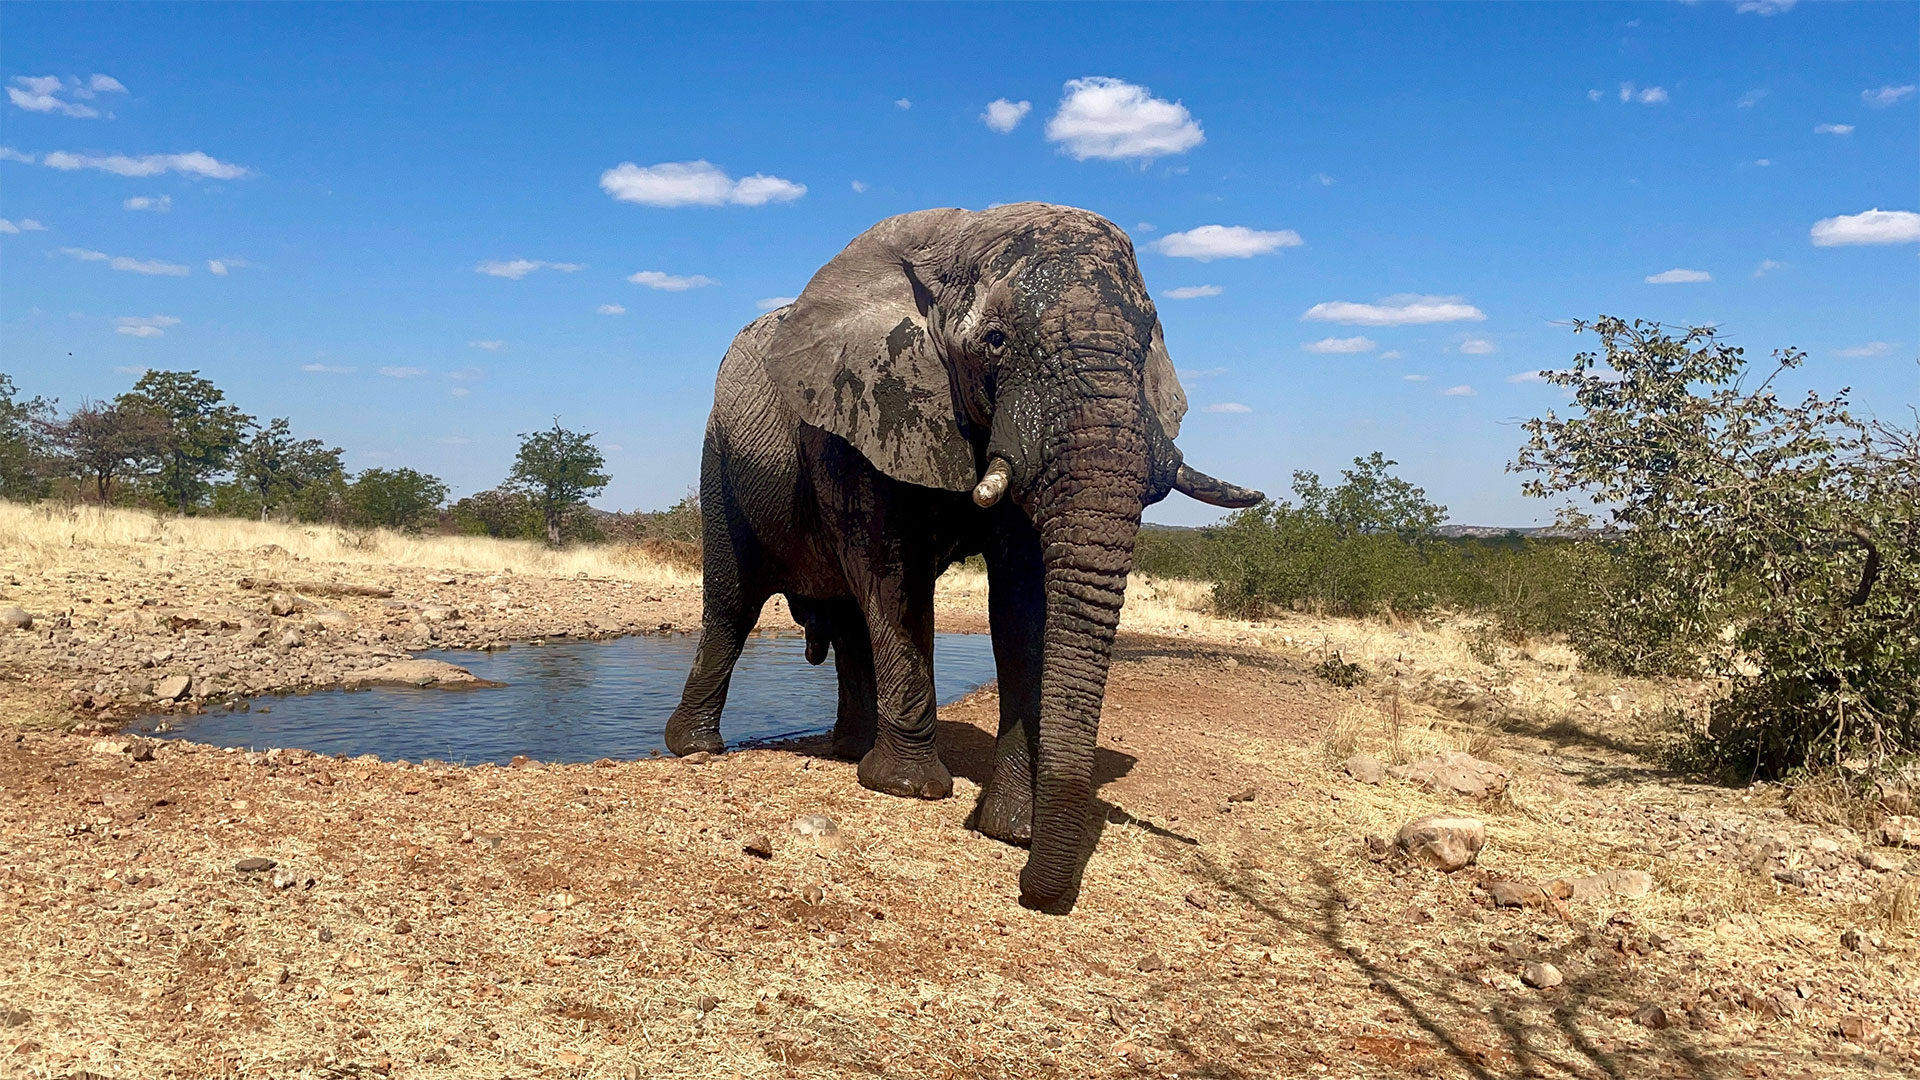 An elephant walking near a small body of water